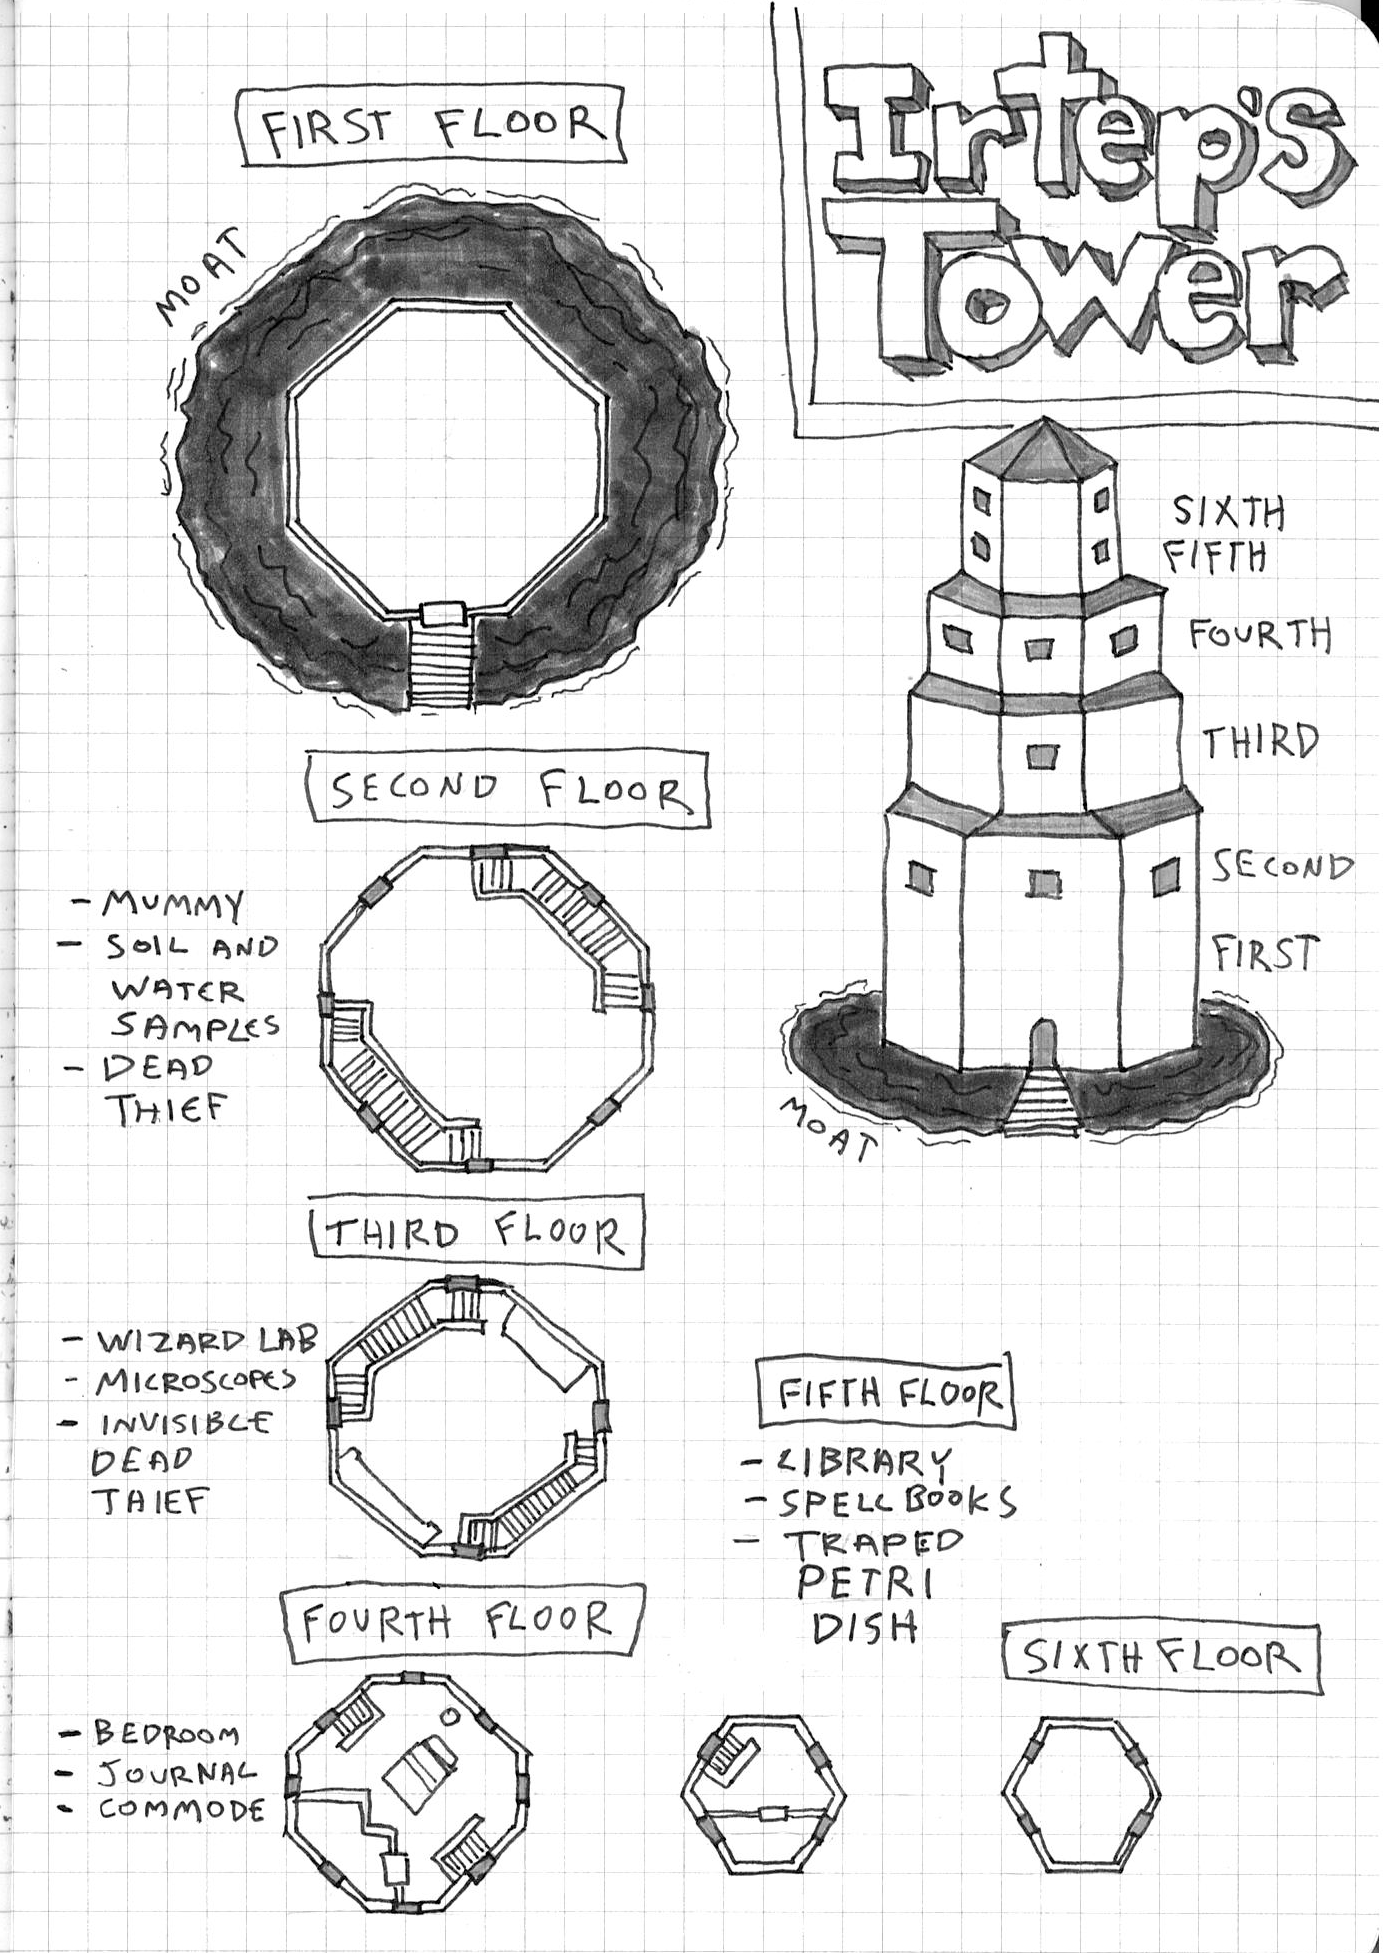 Irtep's Tower Map